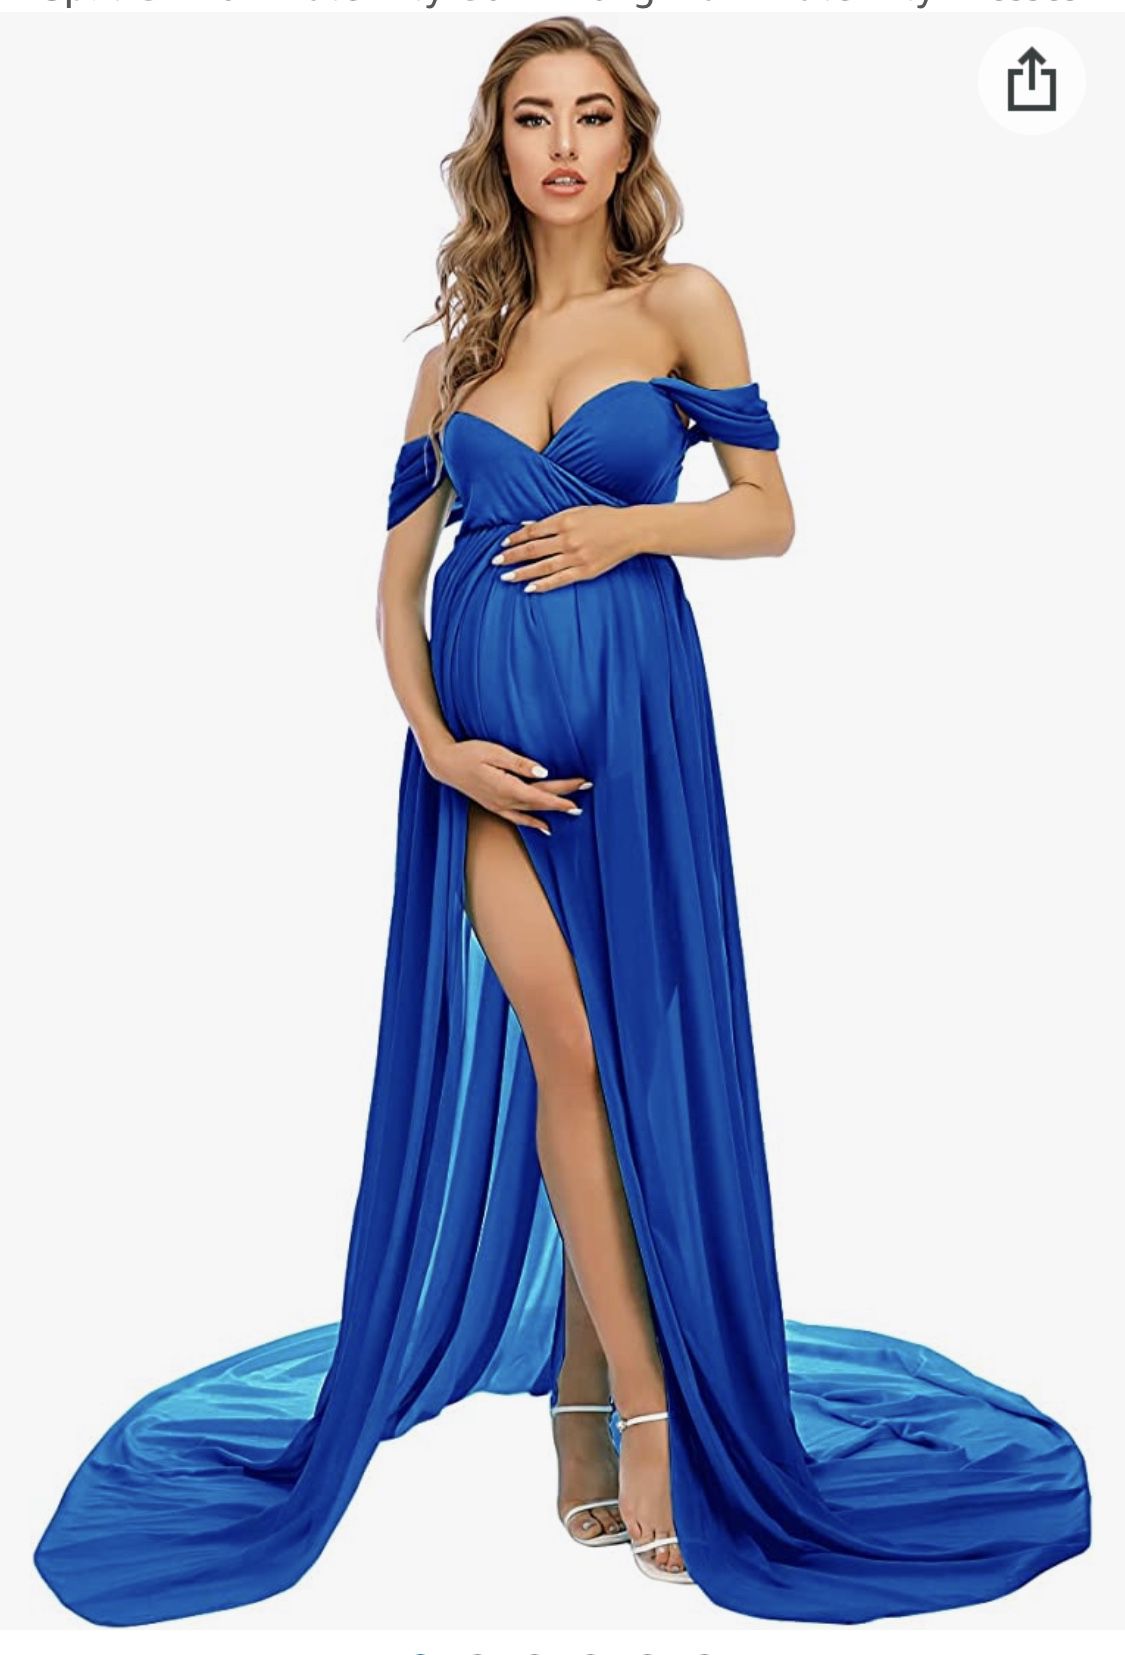 Royal Blue Maternity Dress